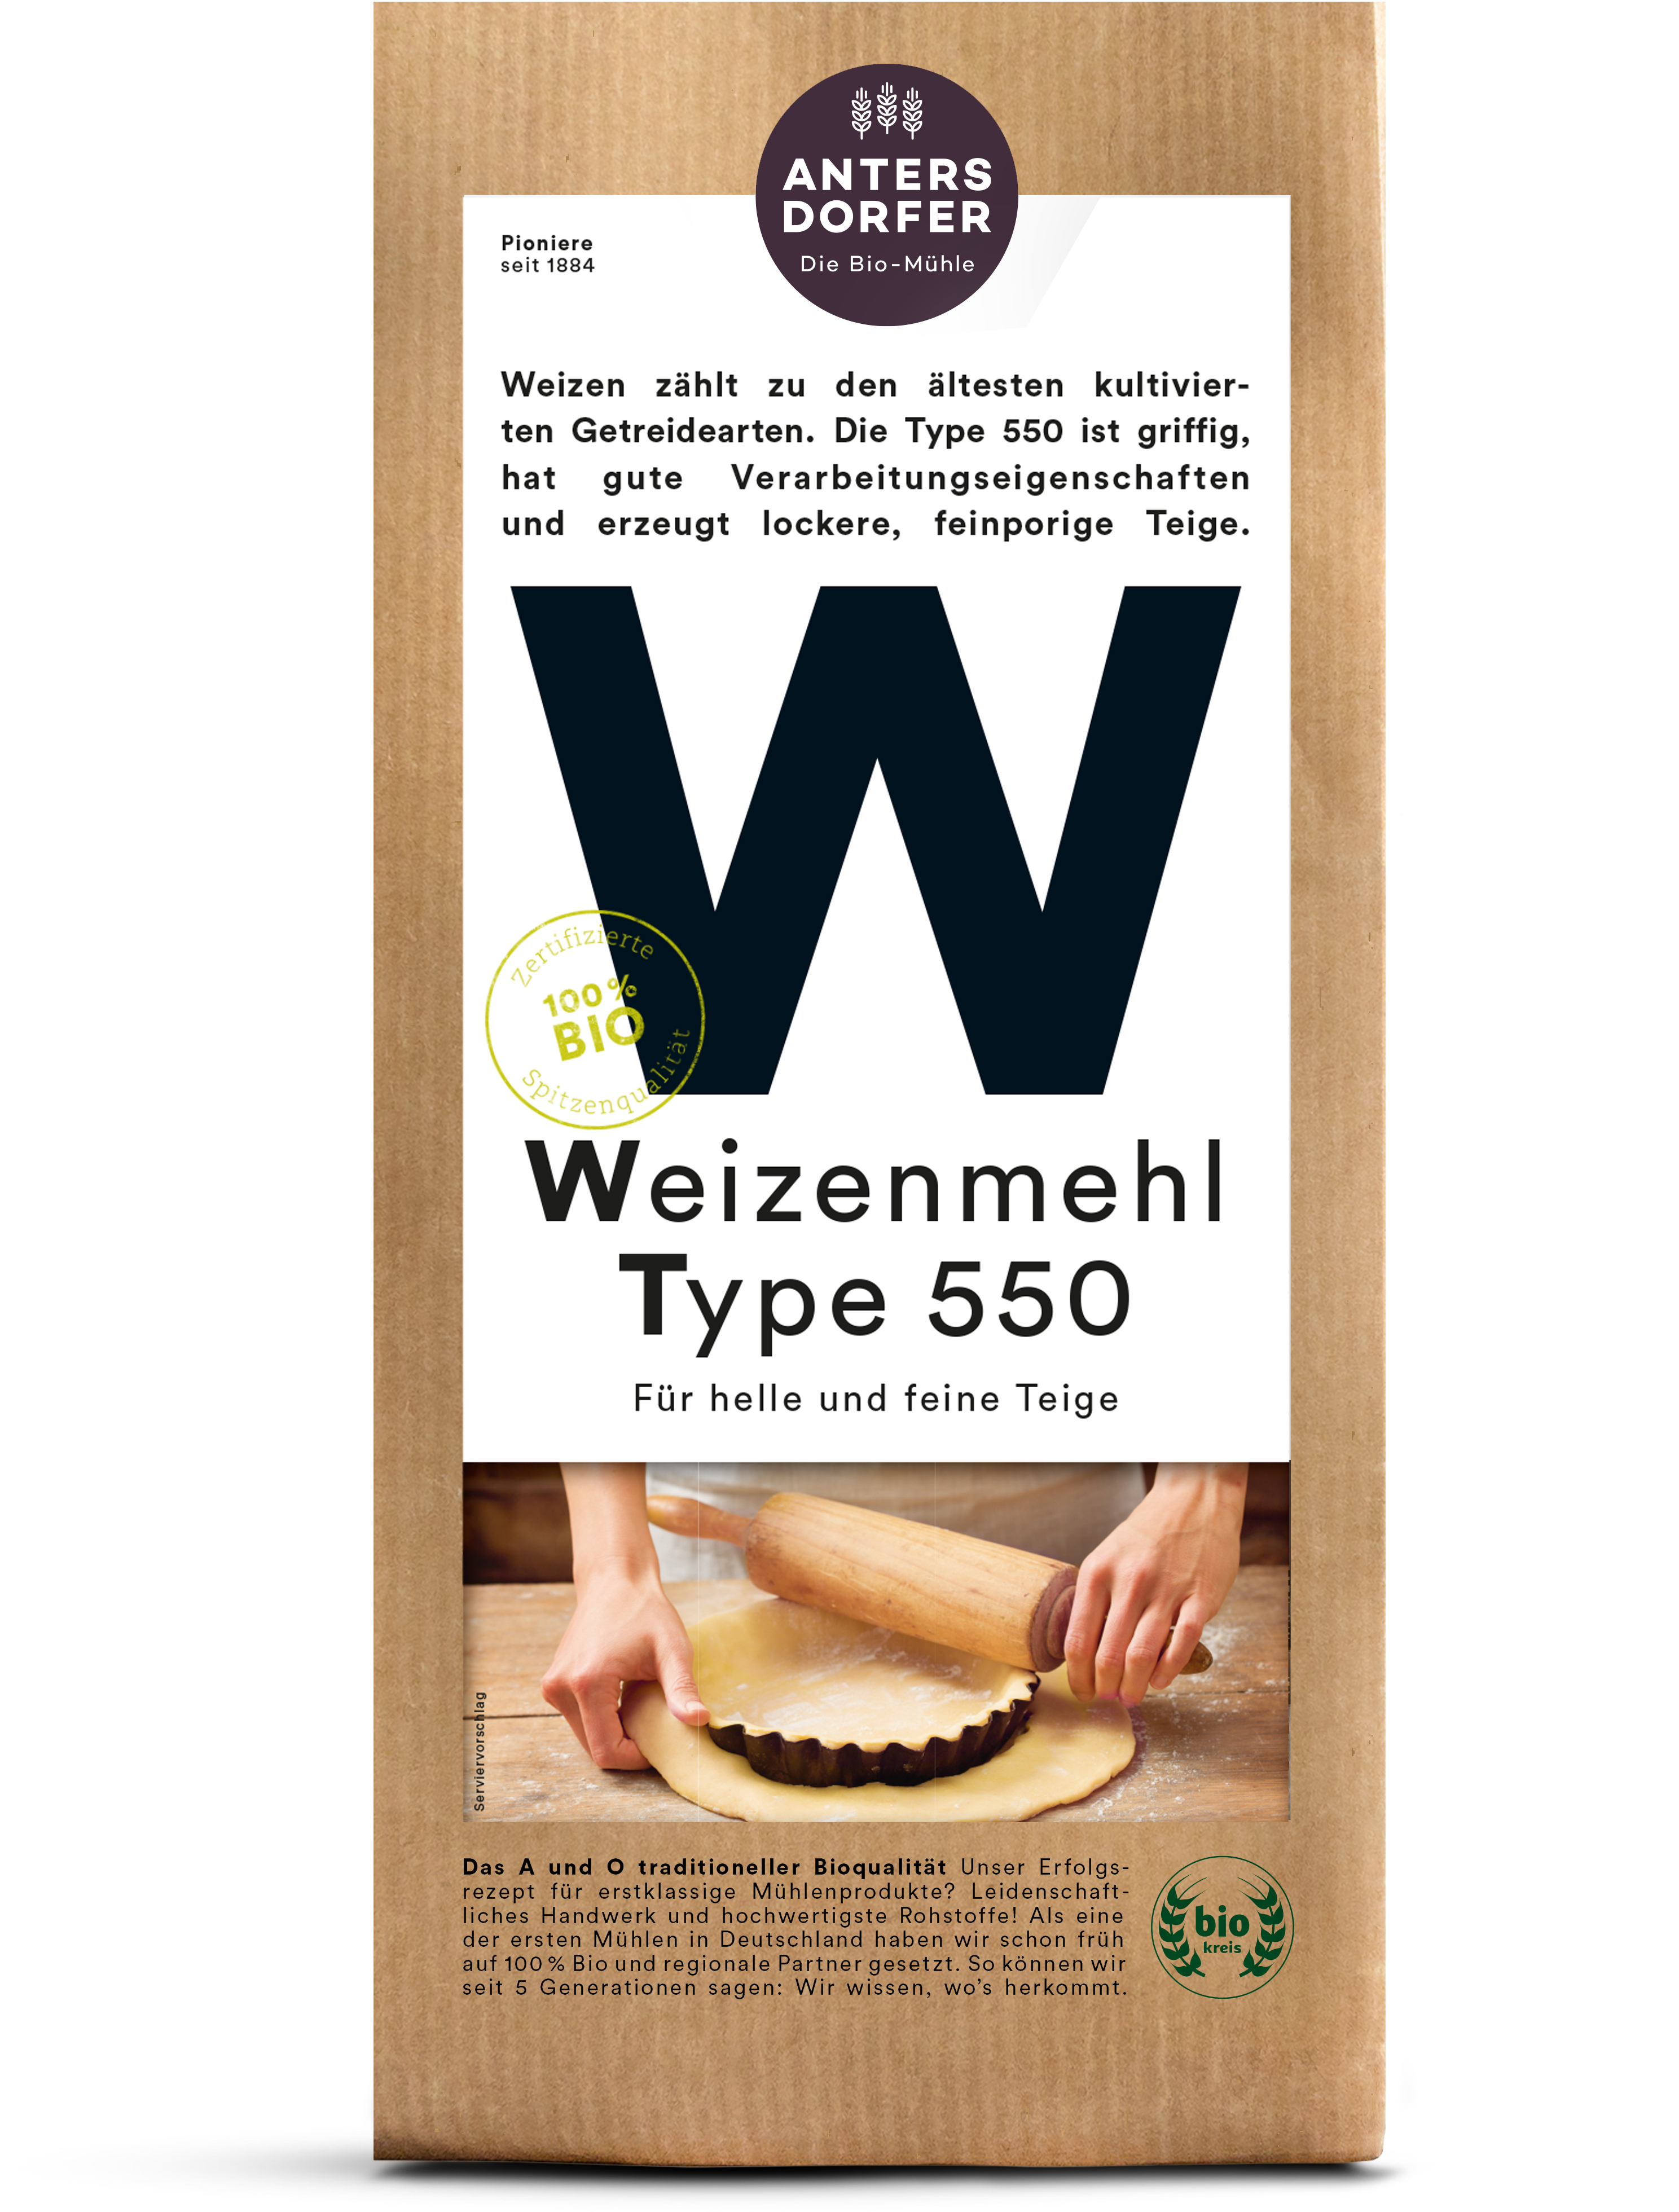 Weizenmehl Type 550